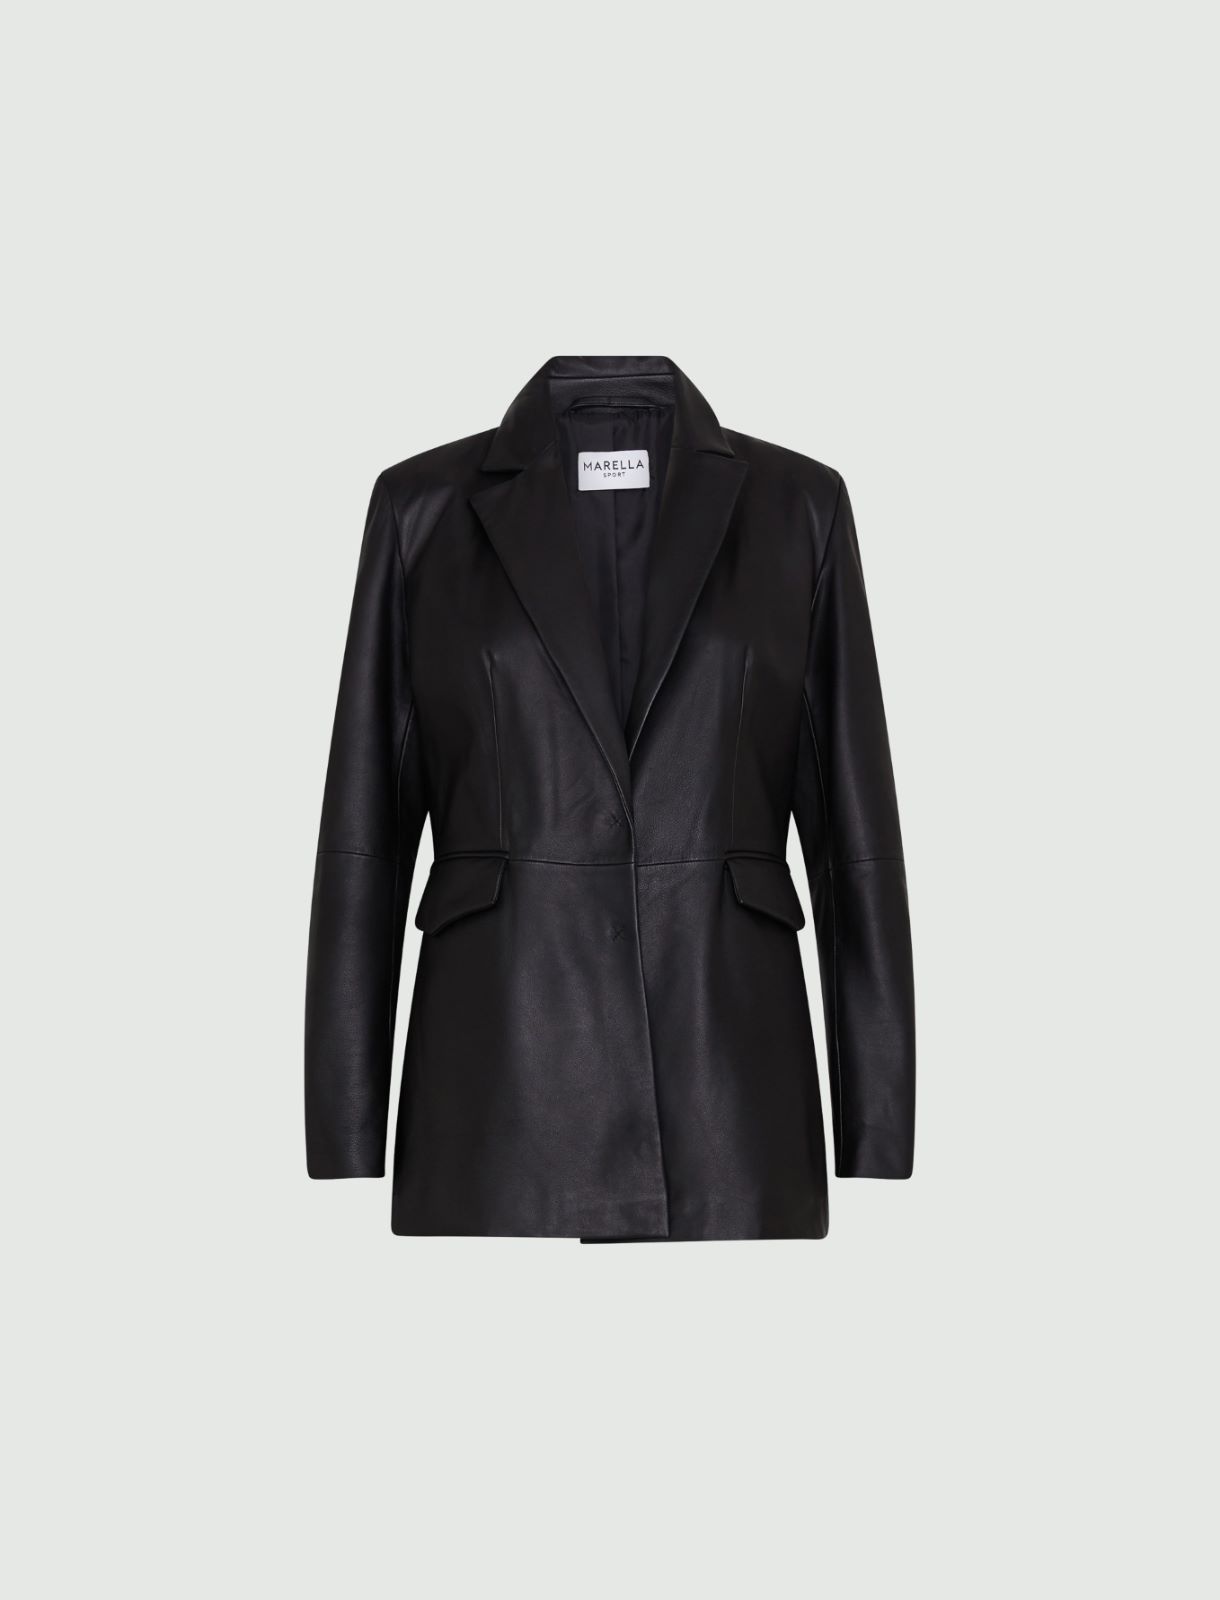 Leather blazer - Black - Marella